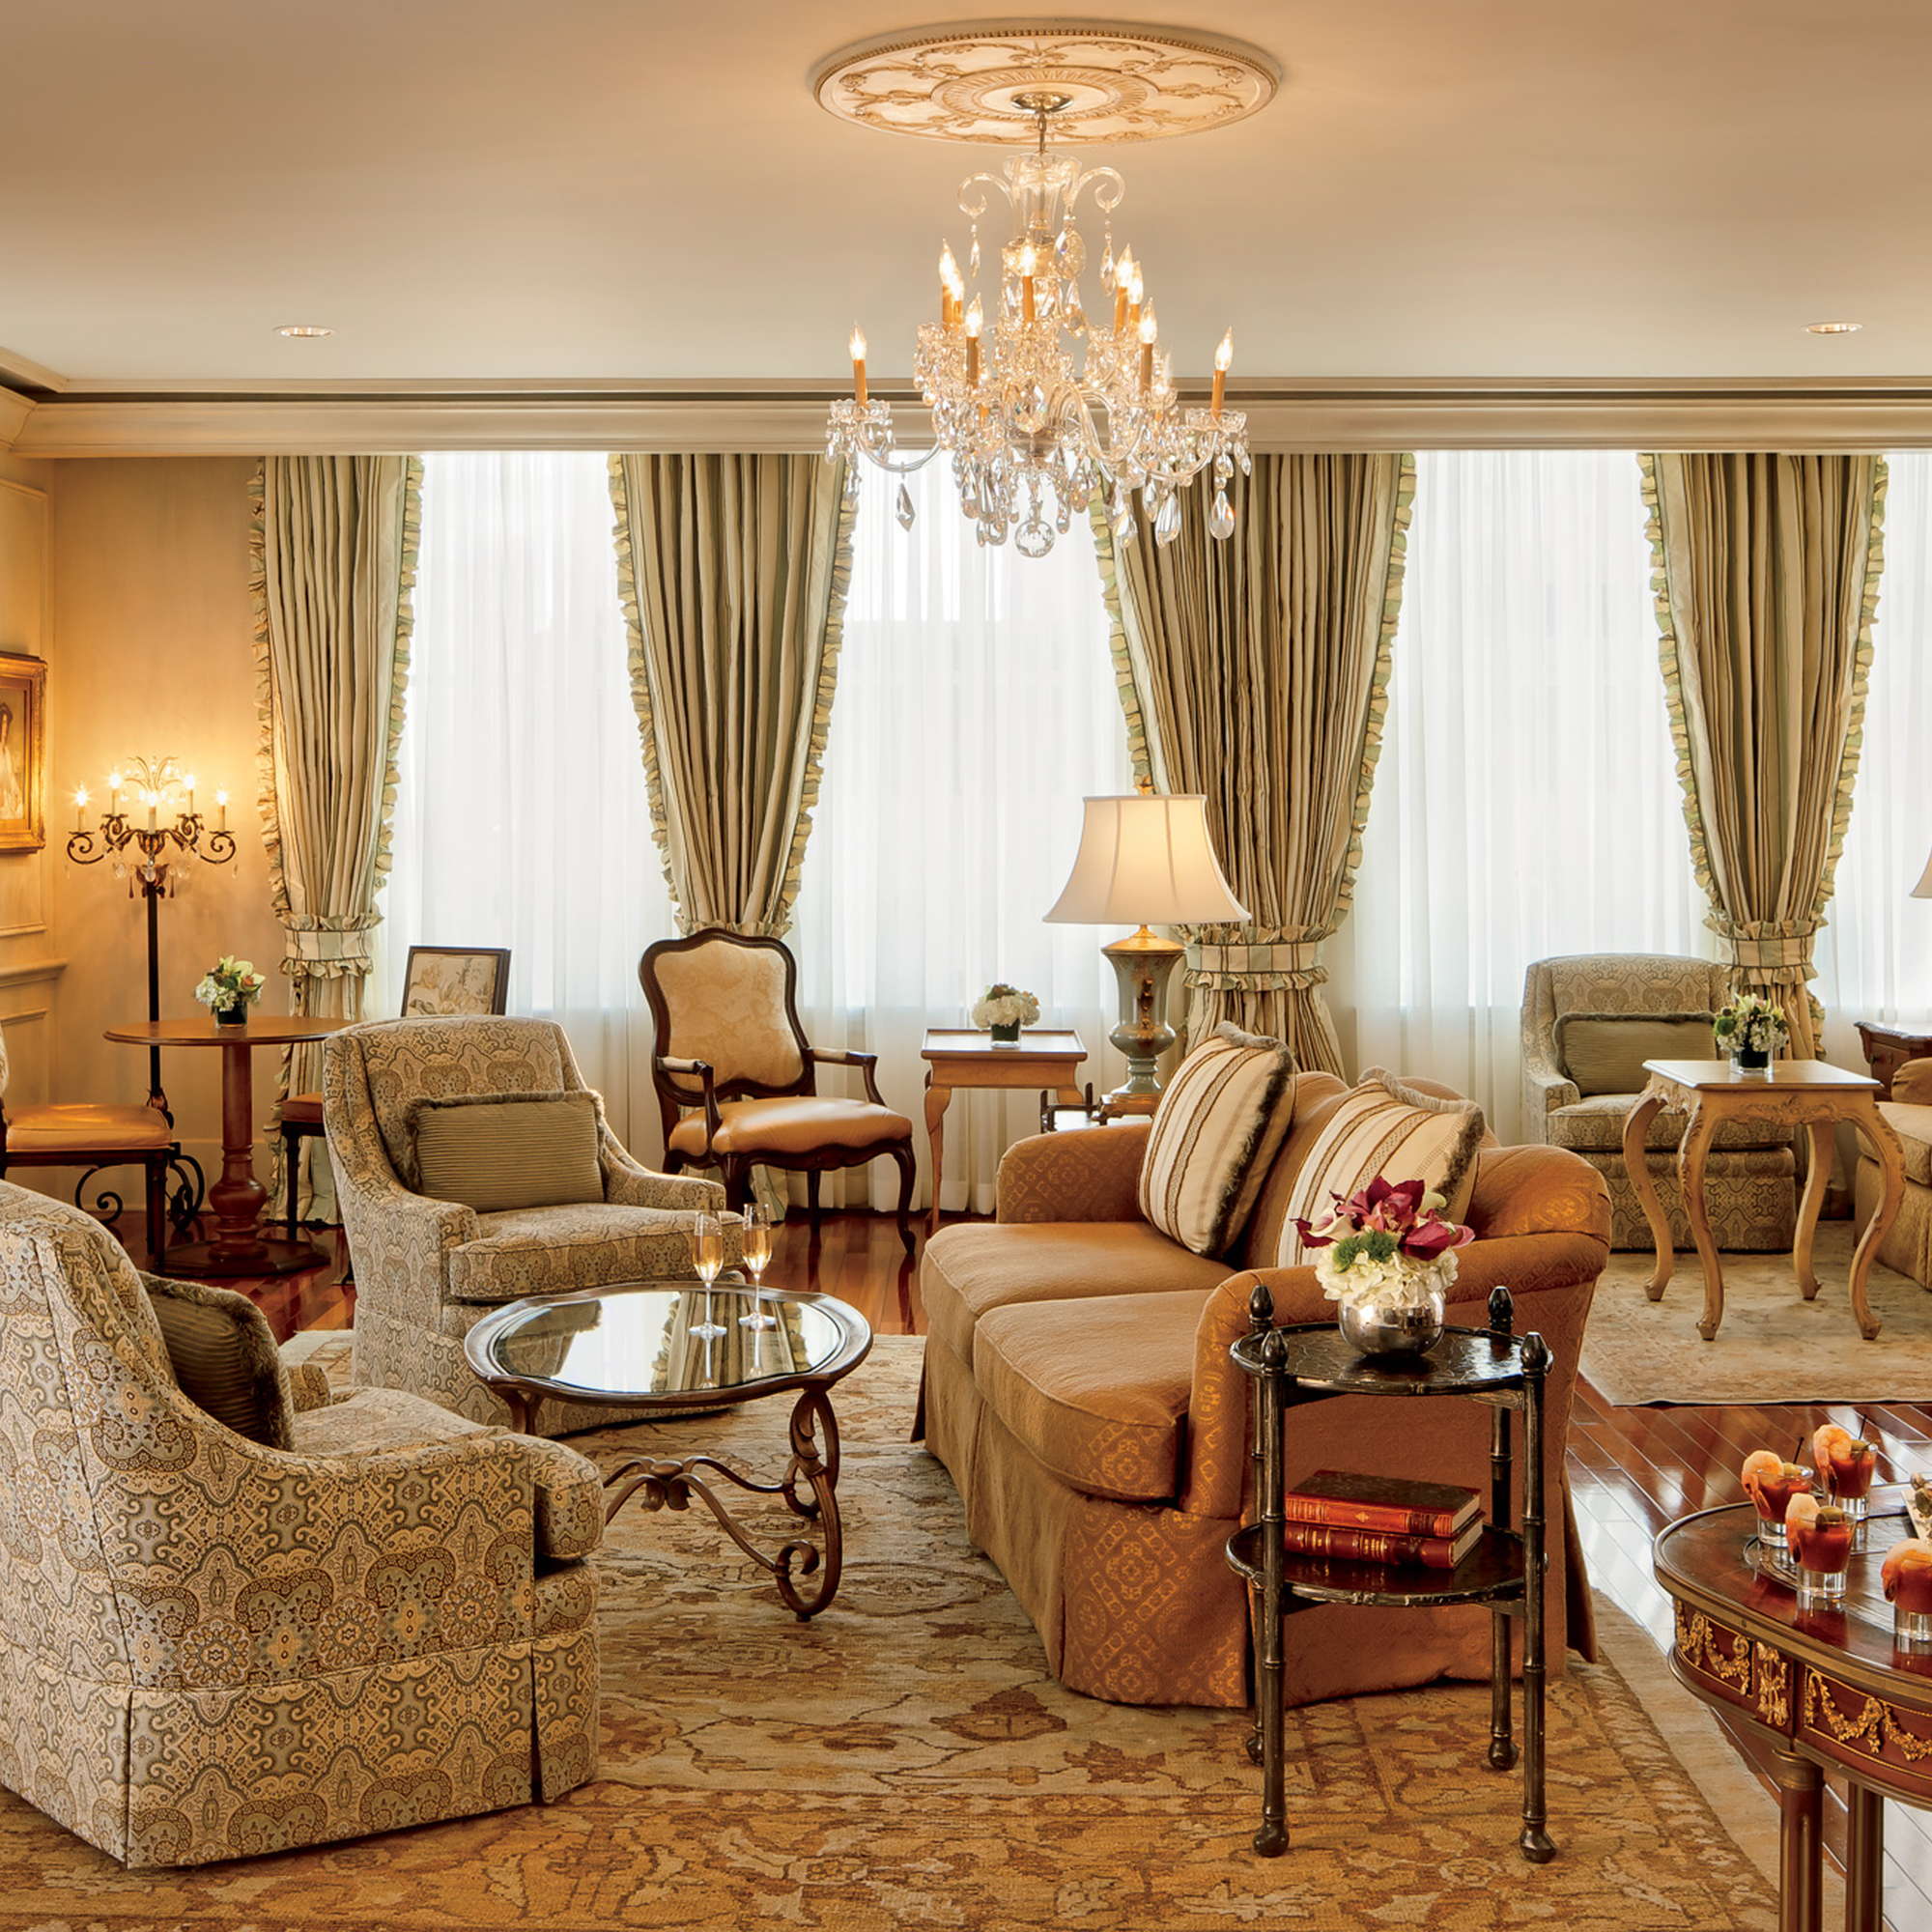 Ritz-Carlton New Orleans Expert Review | Fodor’s Travel